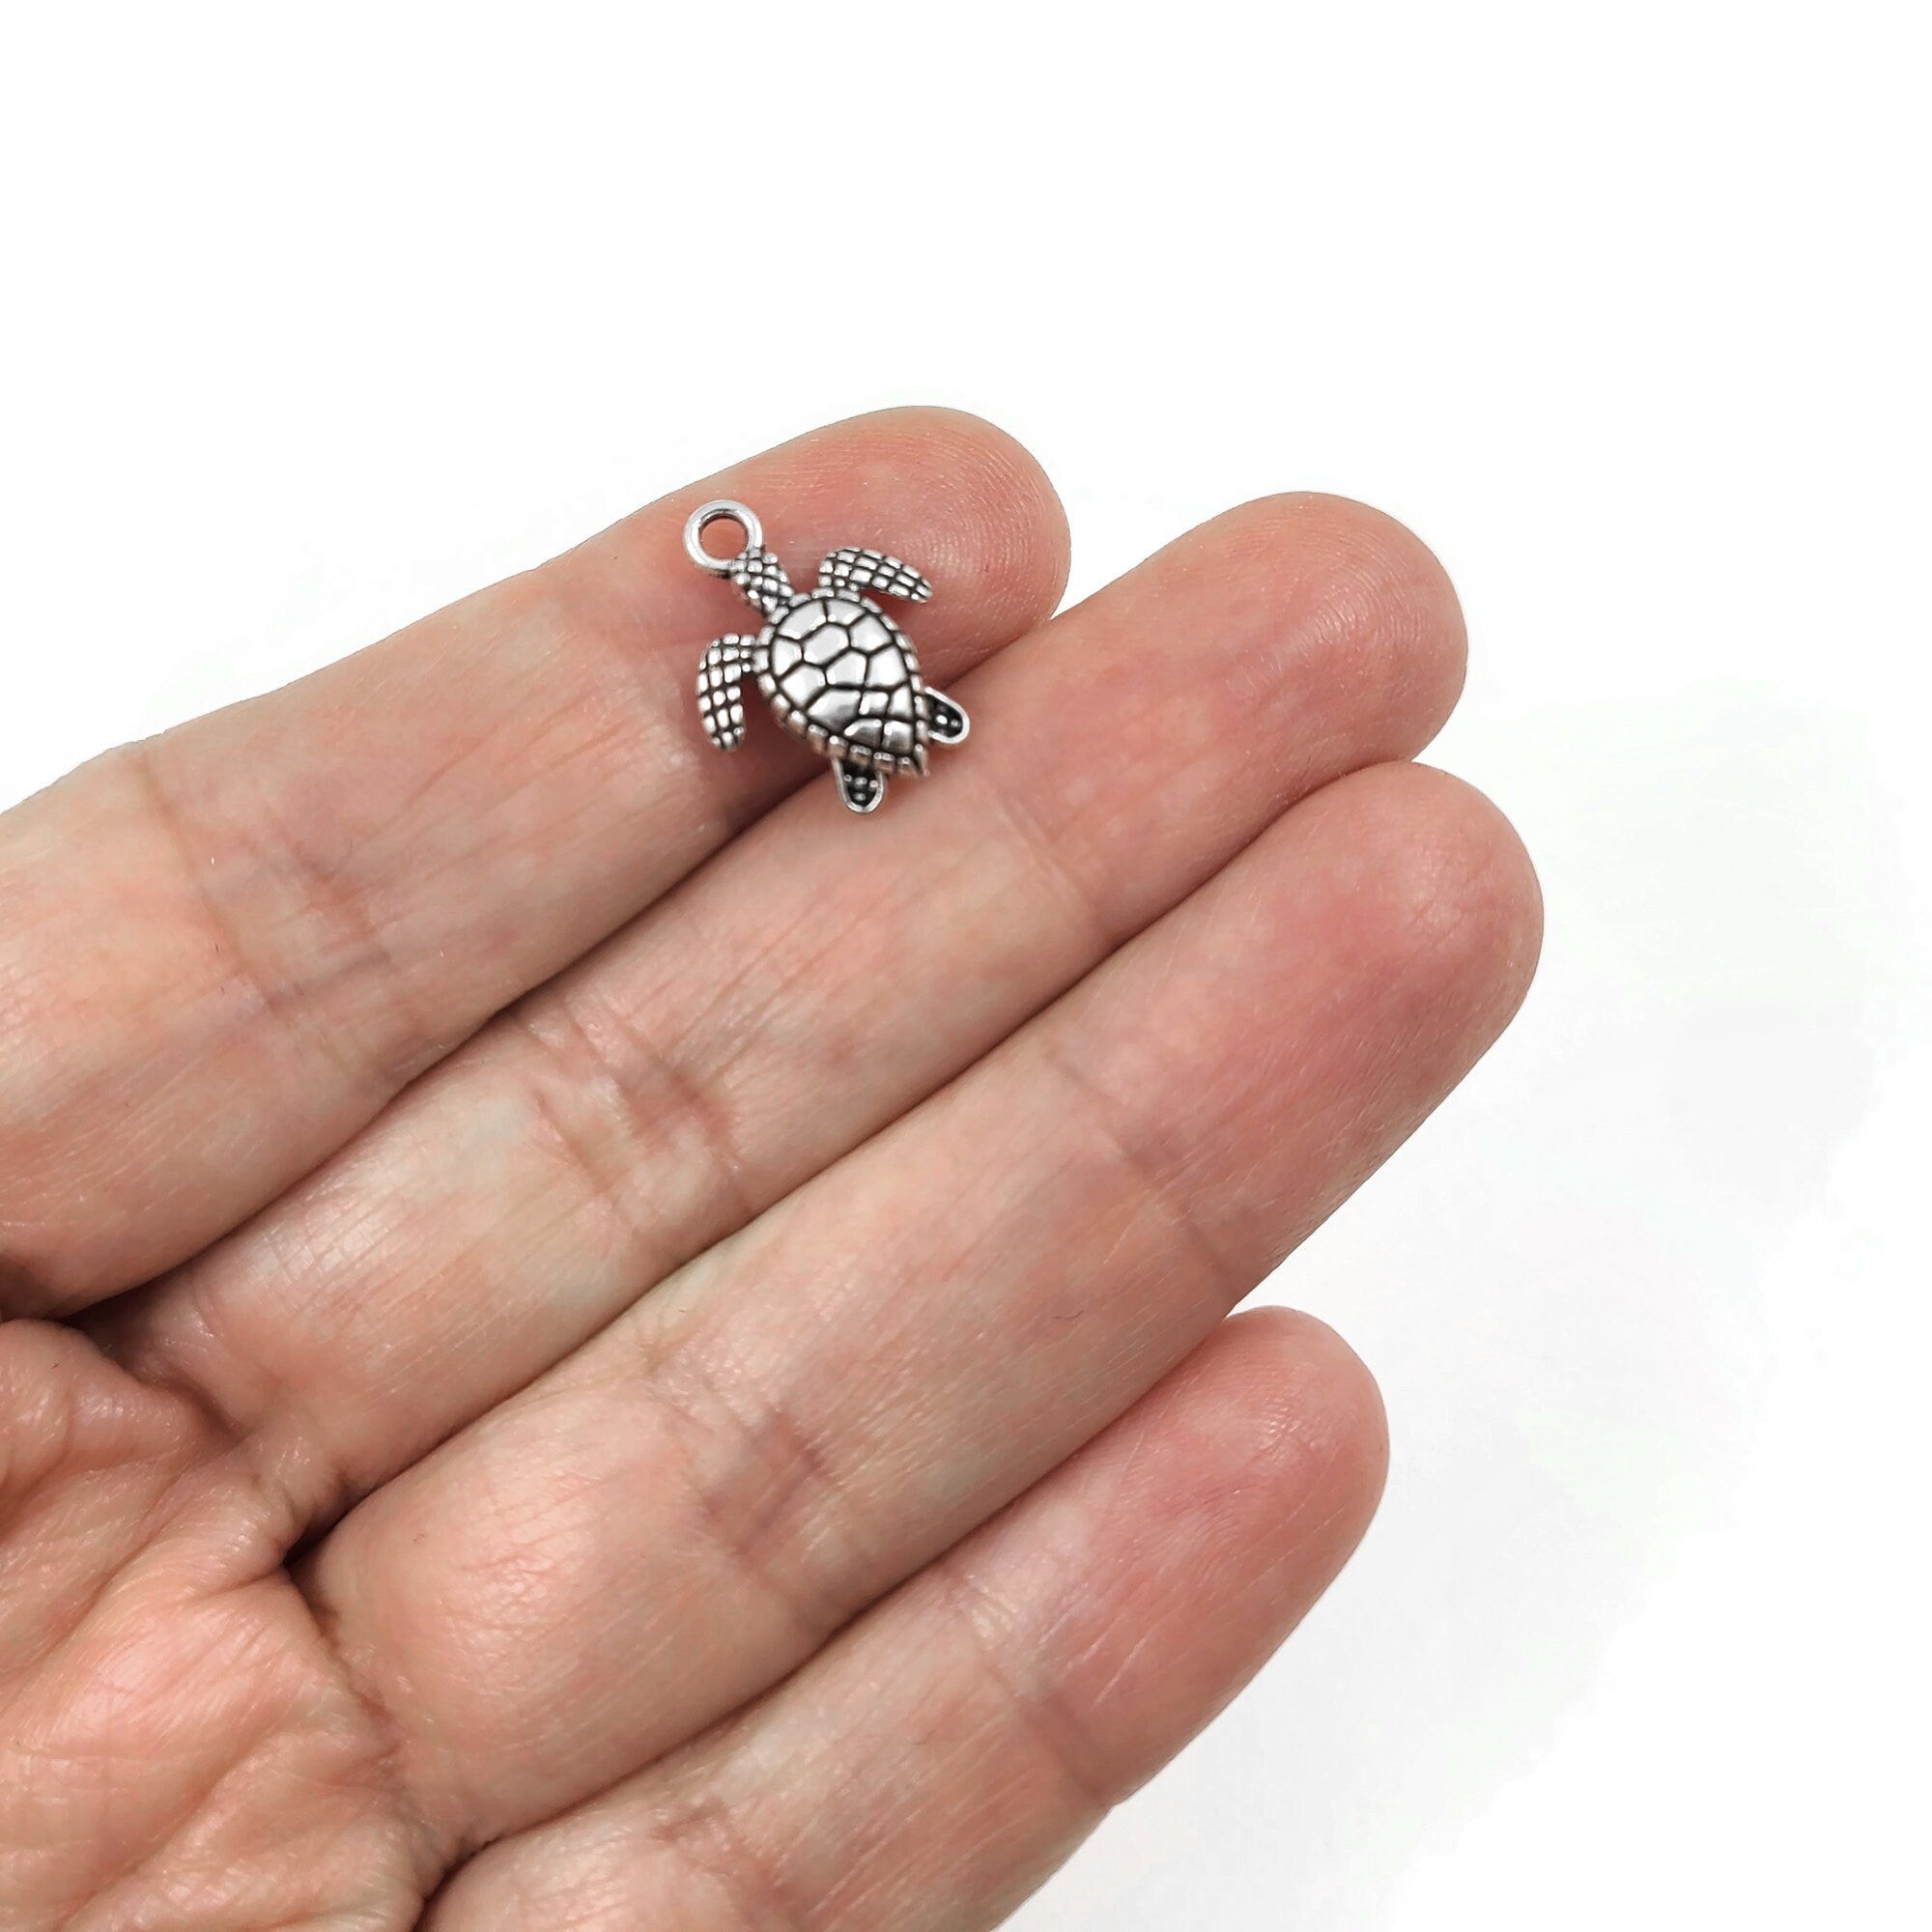 Cute sea turtle charms, 16mm nickel free metal pendants, Hypoallergenic jewelry making